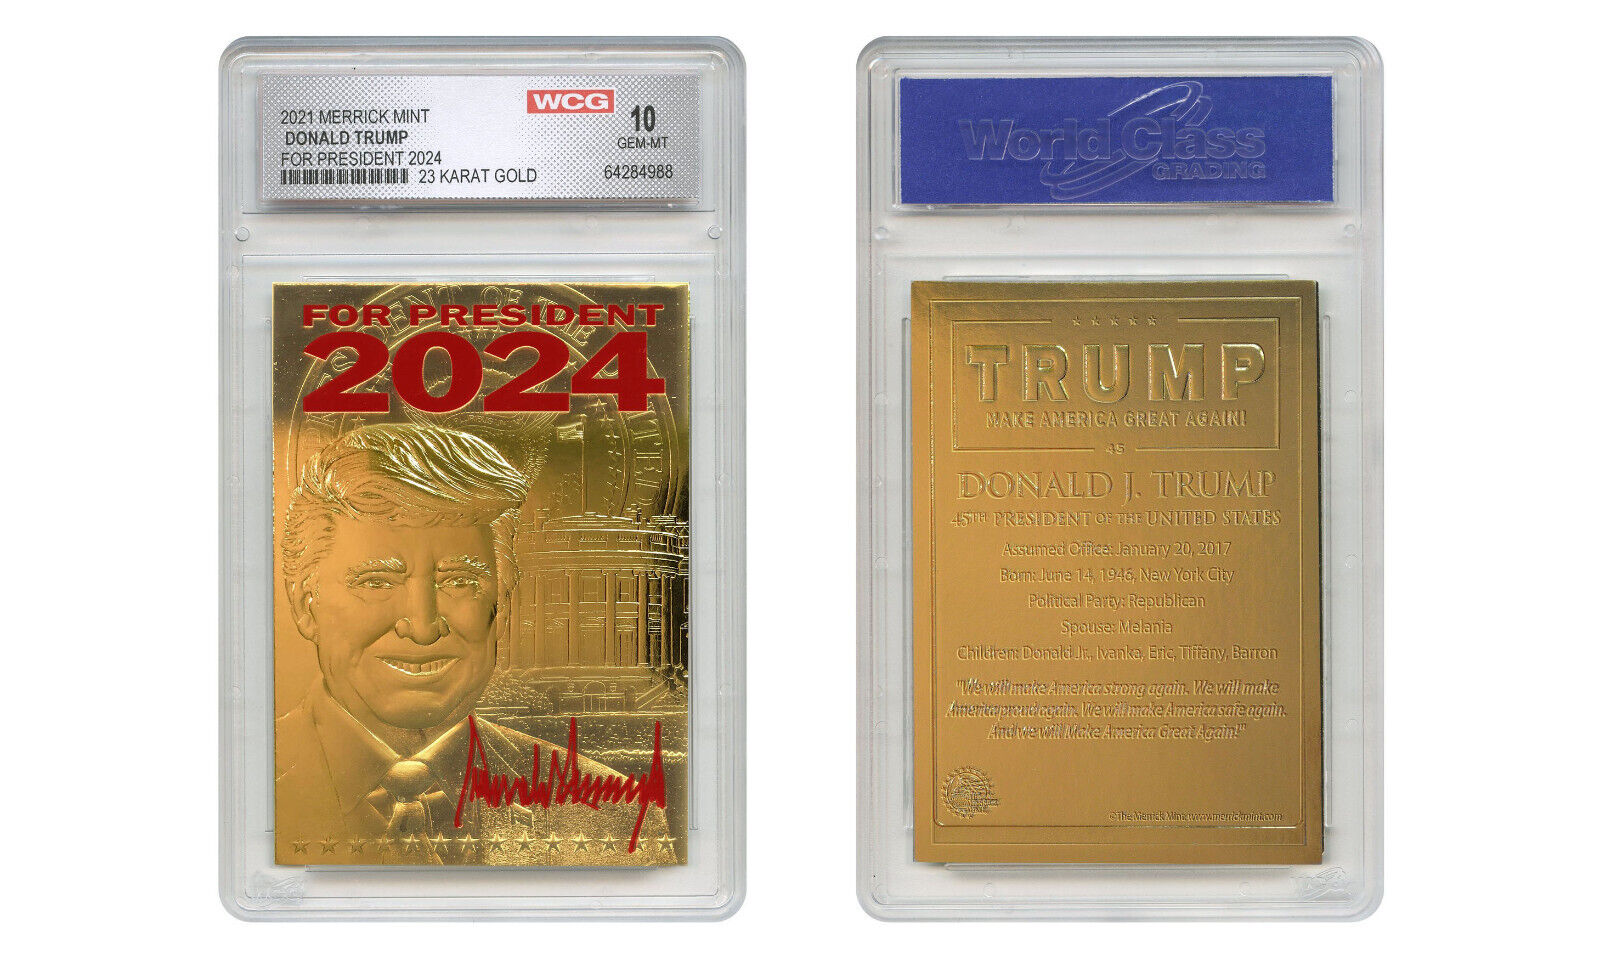 DONALD TRUMP 2024 Save America 23K GOLD SIGNATURE Card - Graded GEM-MINT 10